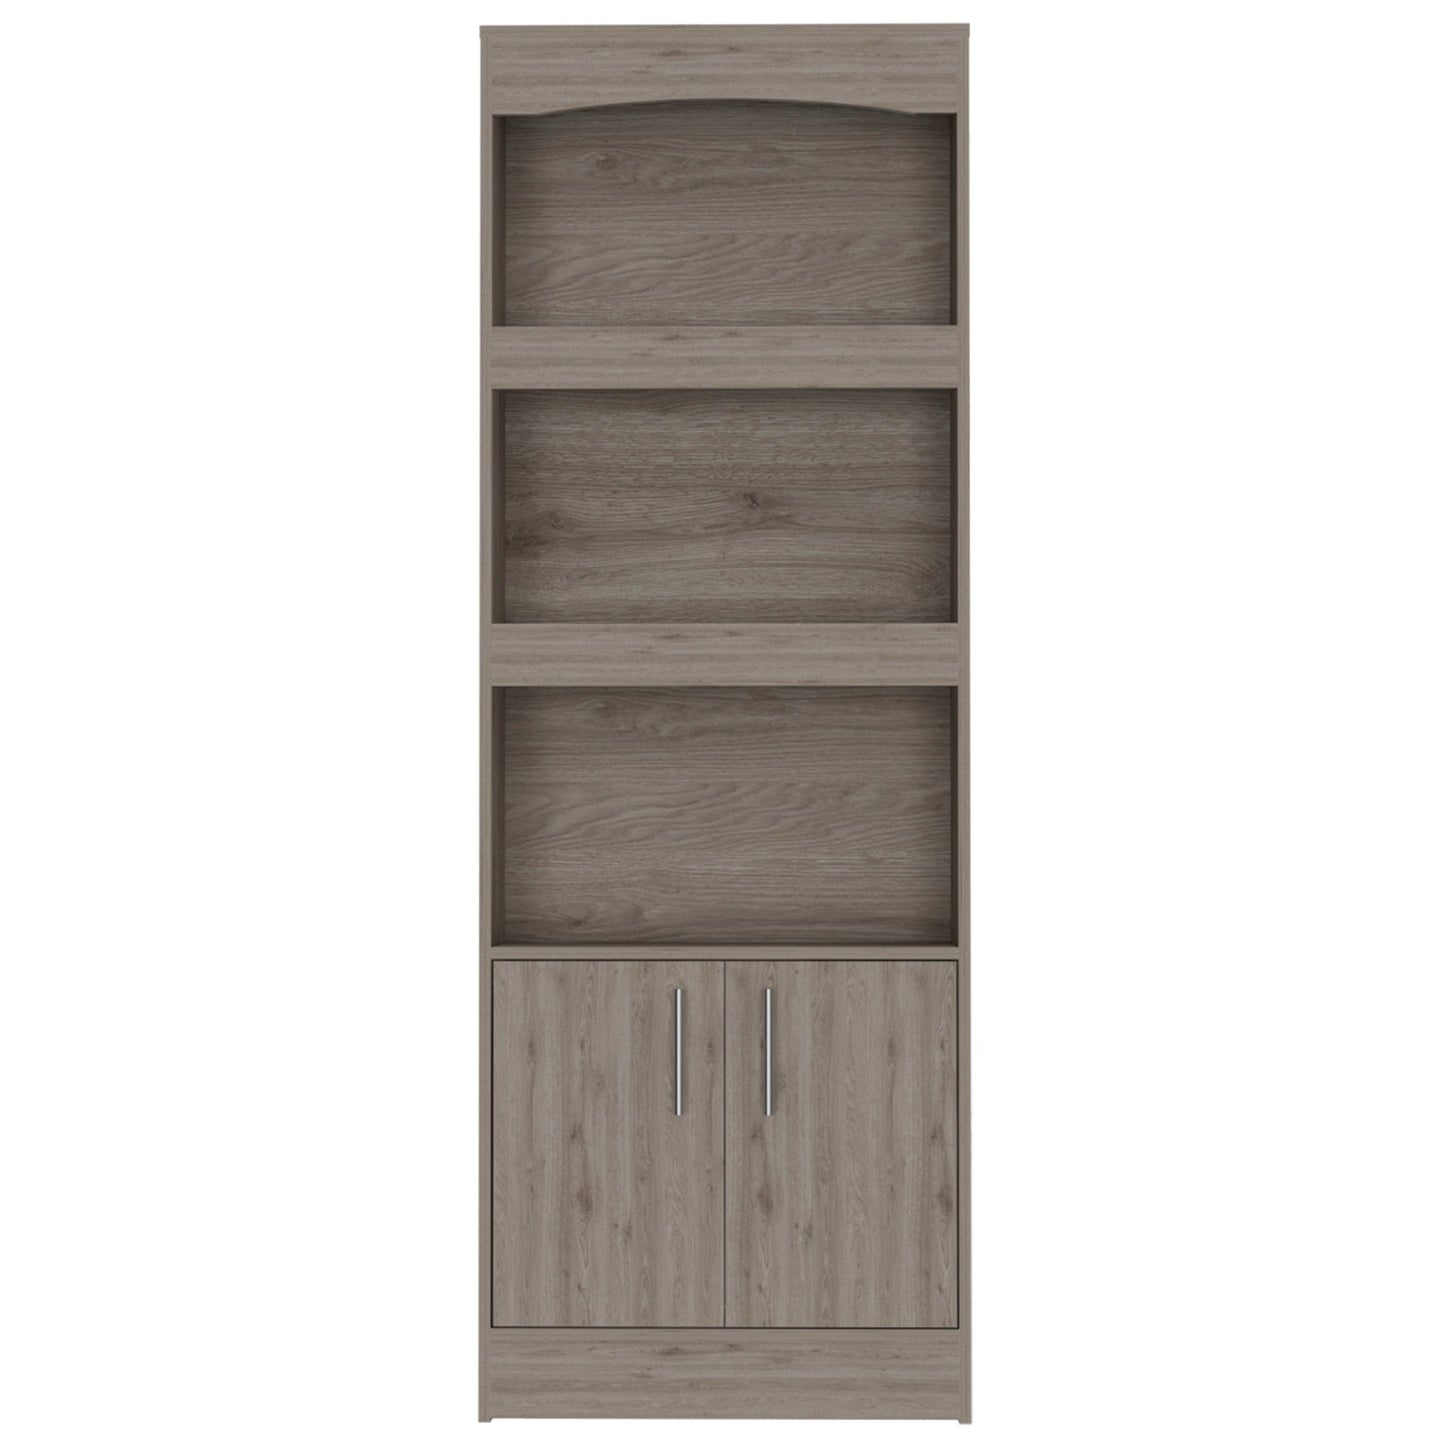 Durango 3-Shelf Double Door Bookcase - Beige